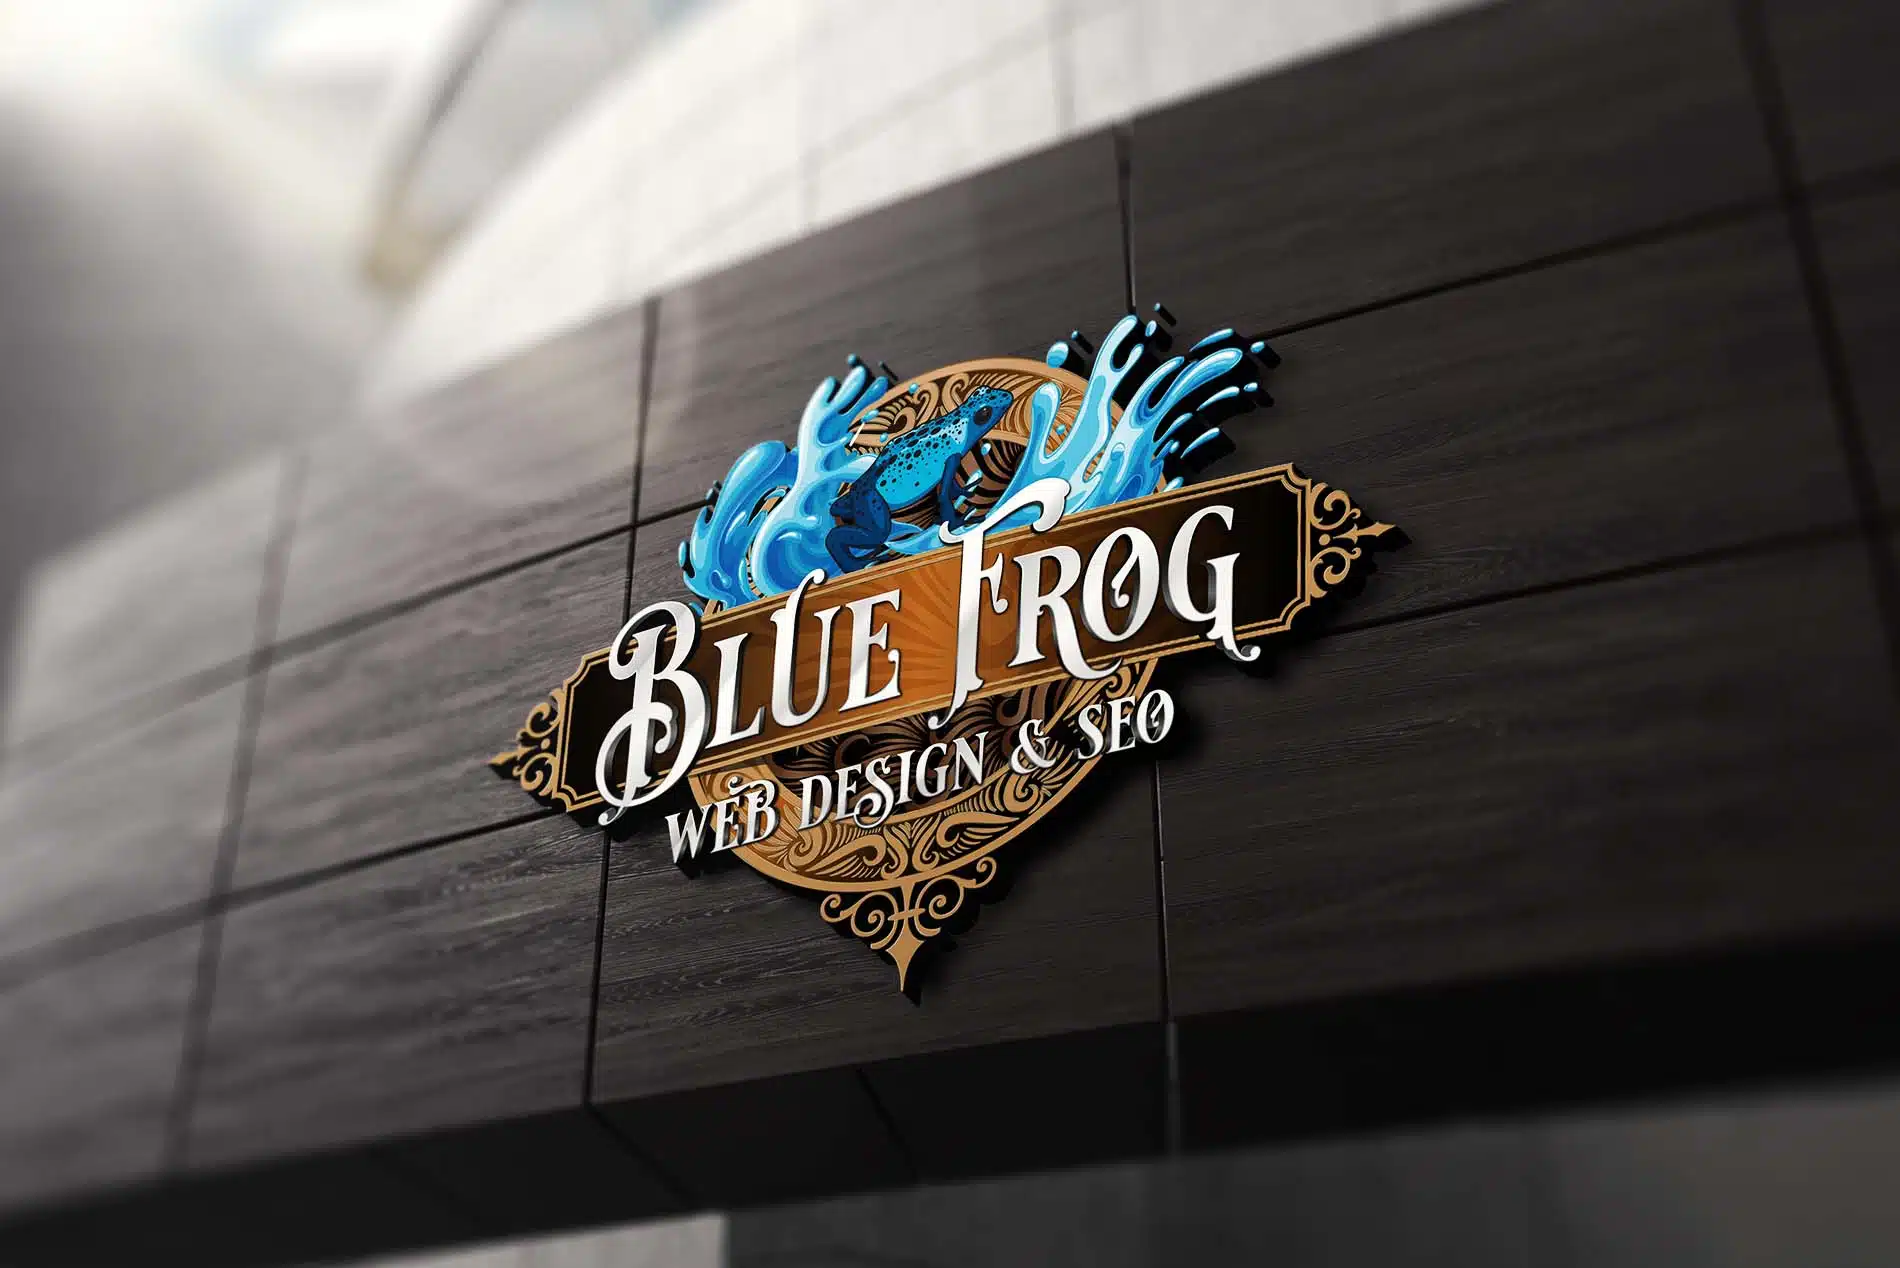 EXPERT WEBSITE DESIGN COMPANY  IN ANTELOPE, CA. Blue Frog Web Design & SEO